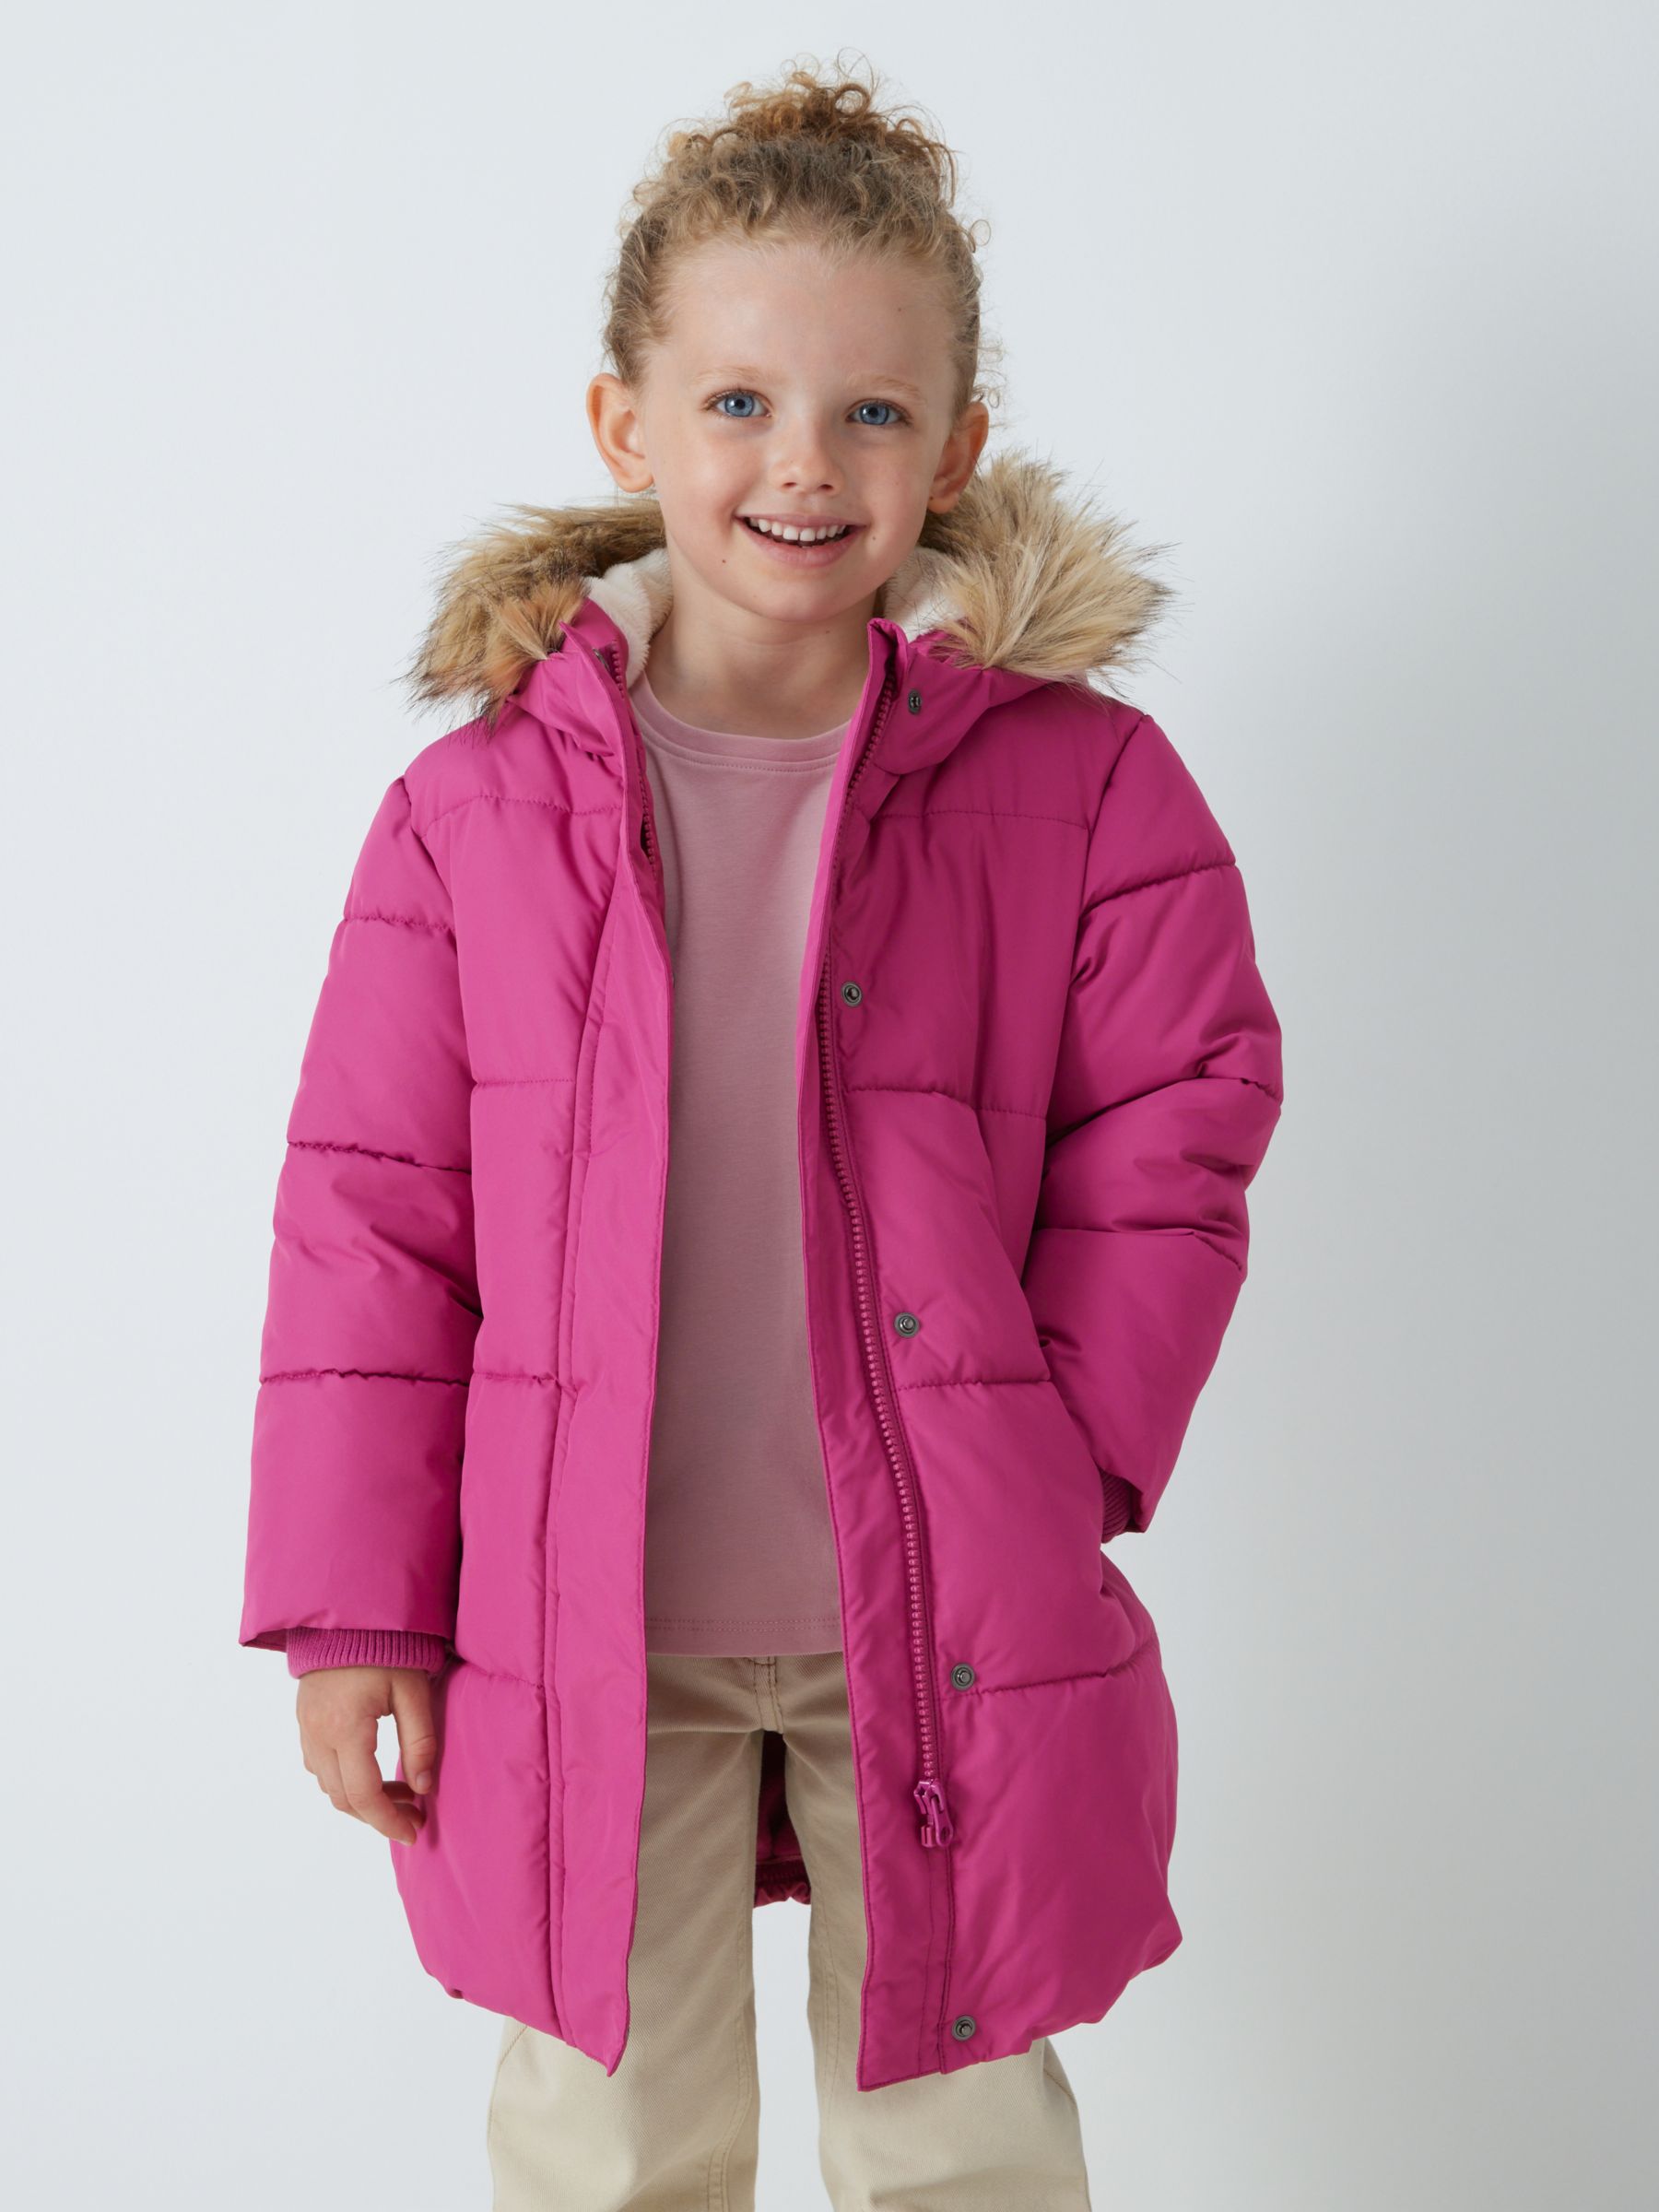 stylish winter jackets for girls